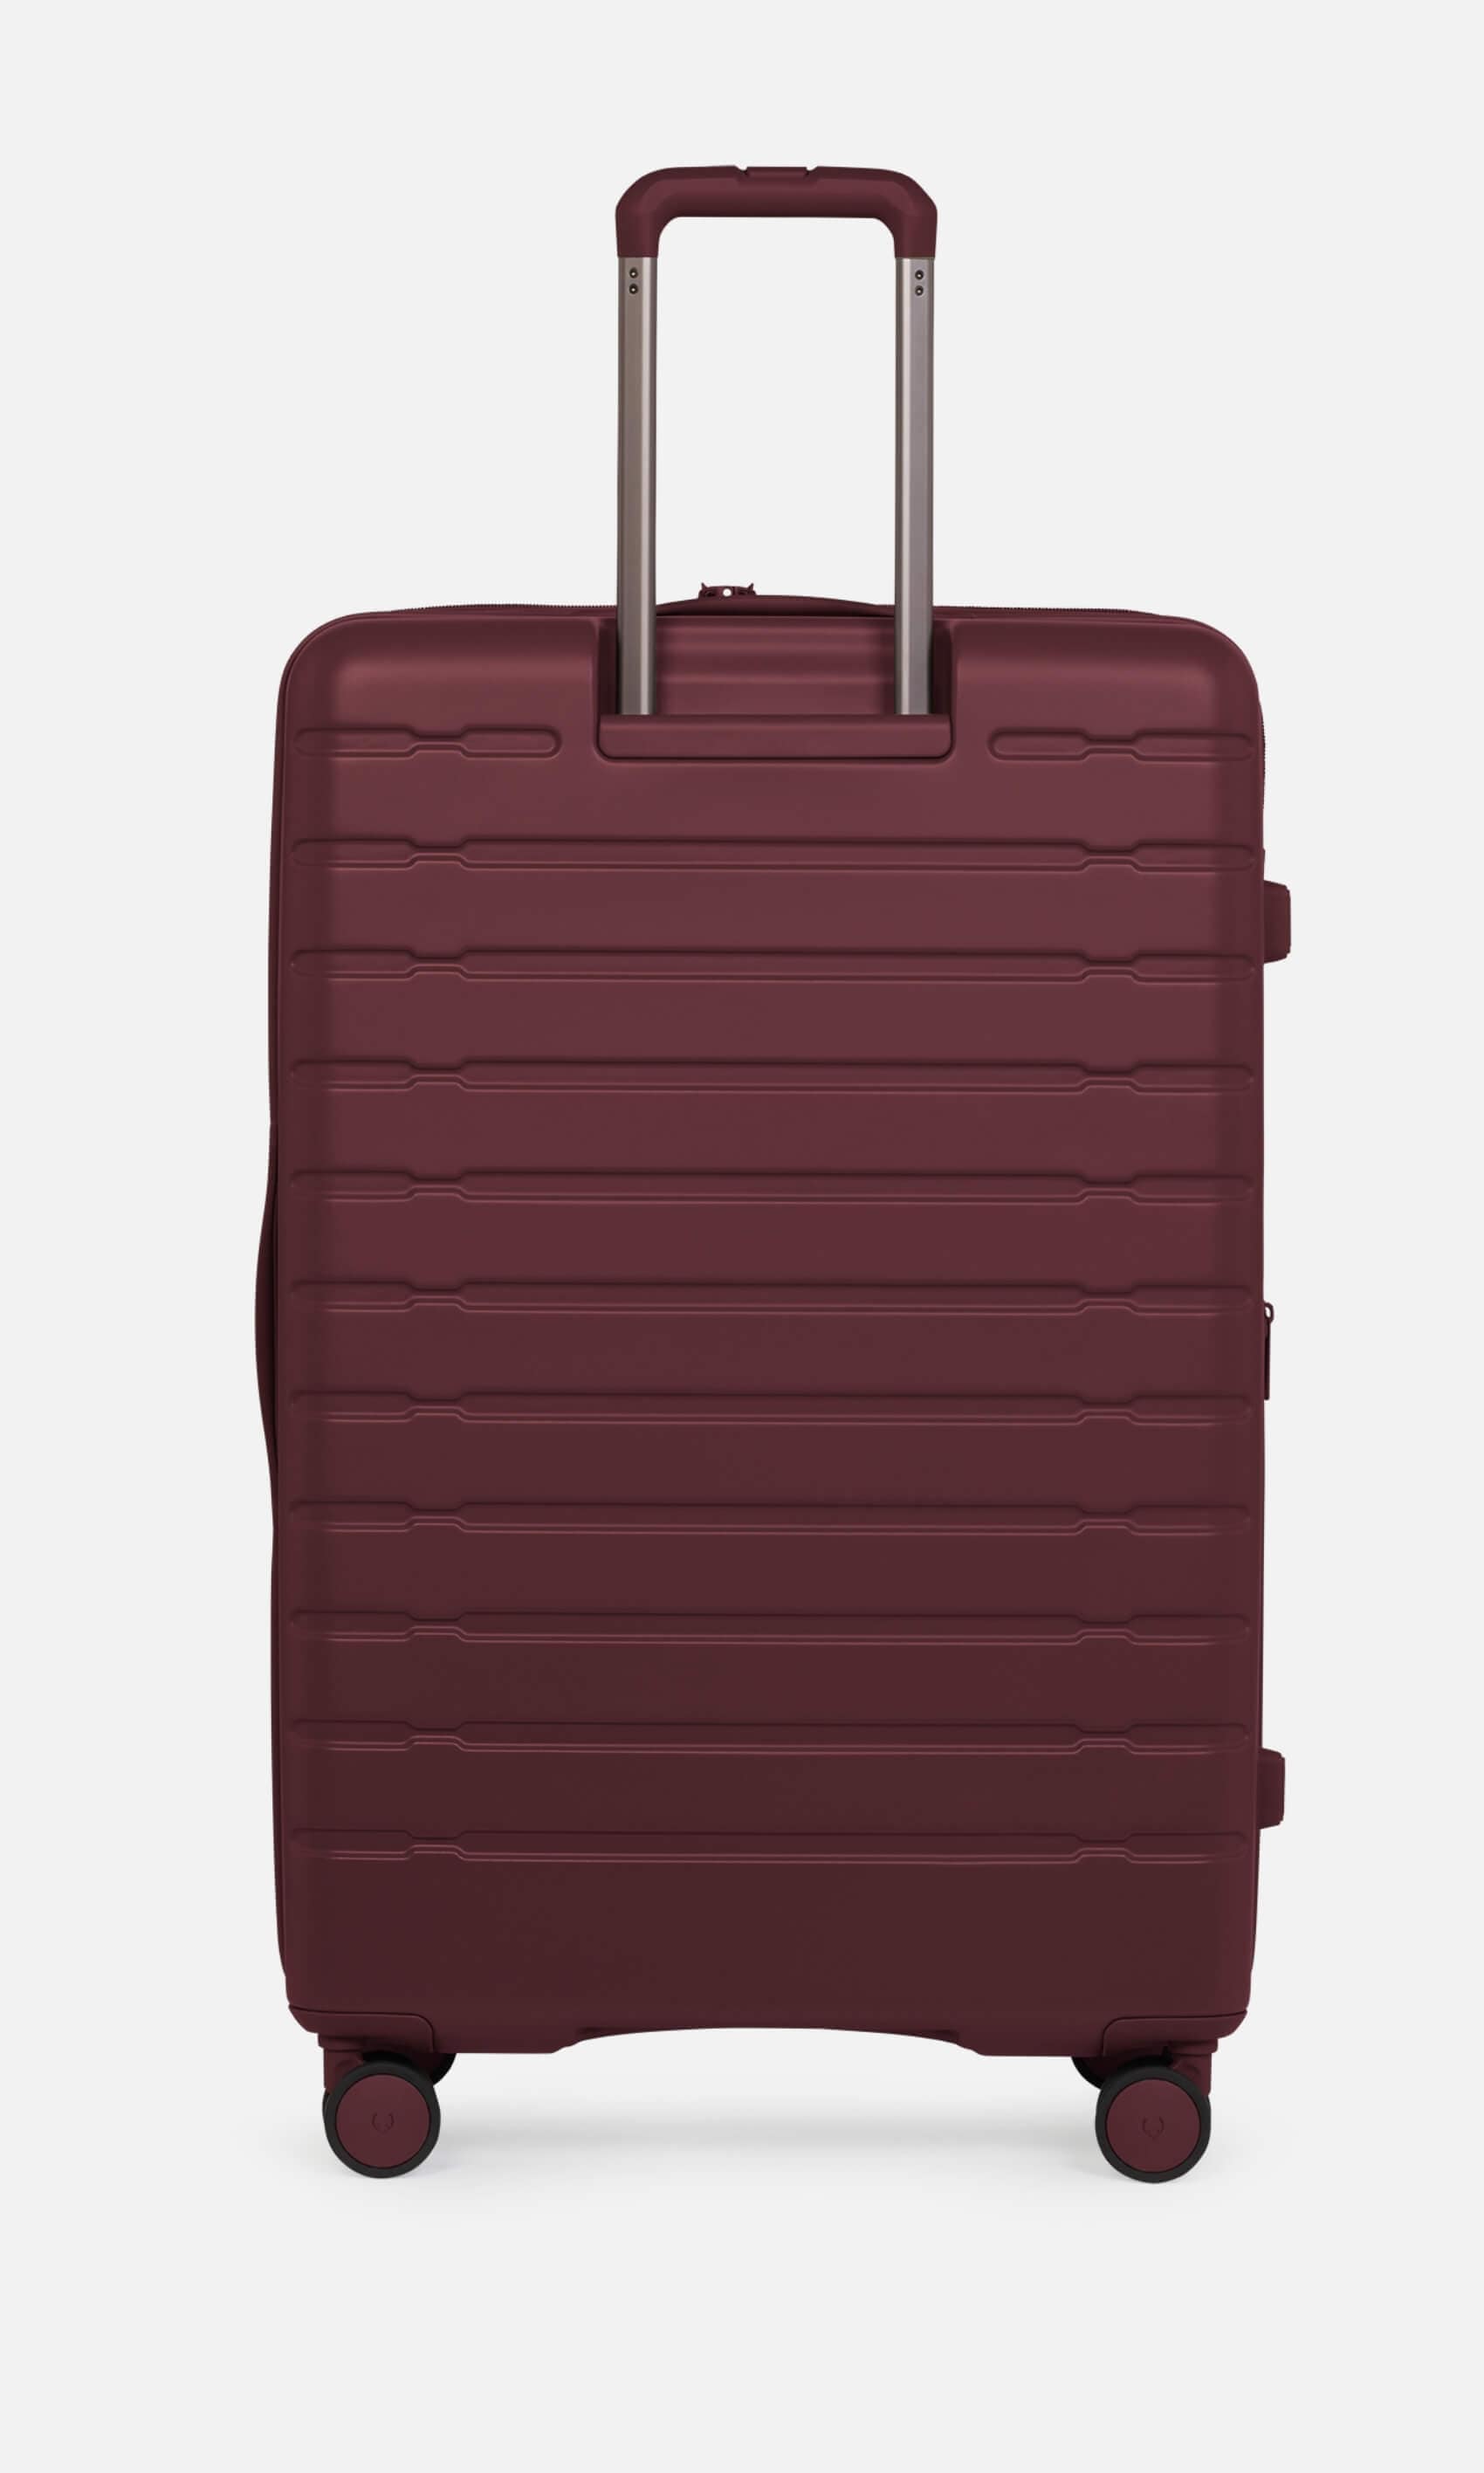 Antler Luggage -  Stamford large in berry purple - Hard Suitcases Stamford Large Suitcase Purple | Hard Luggage | Antler 